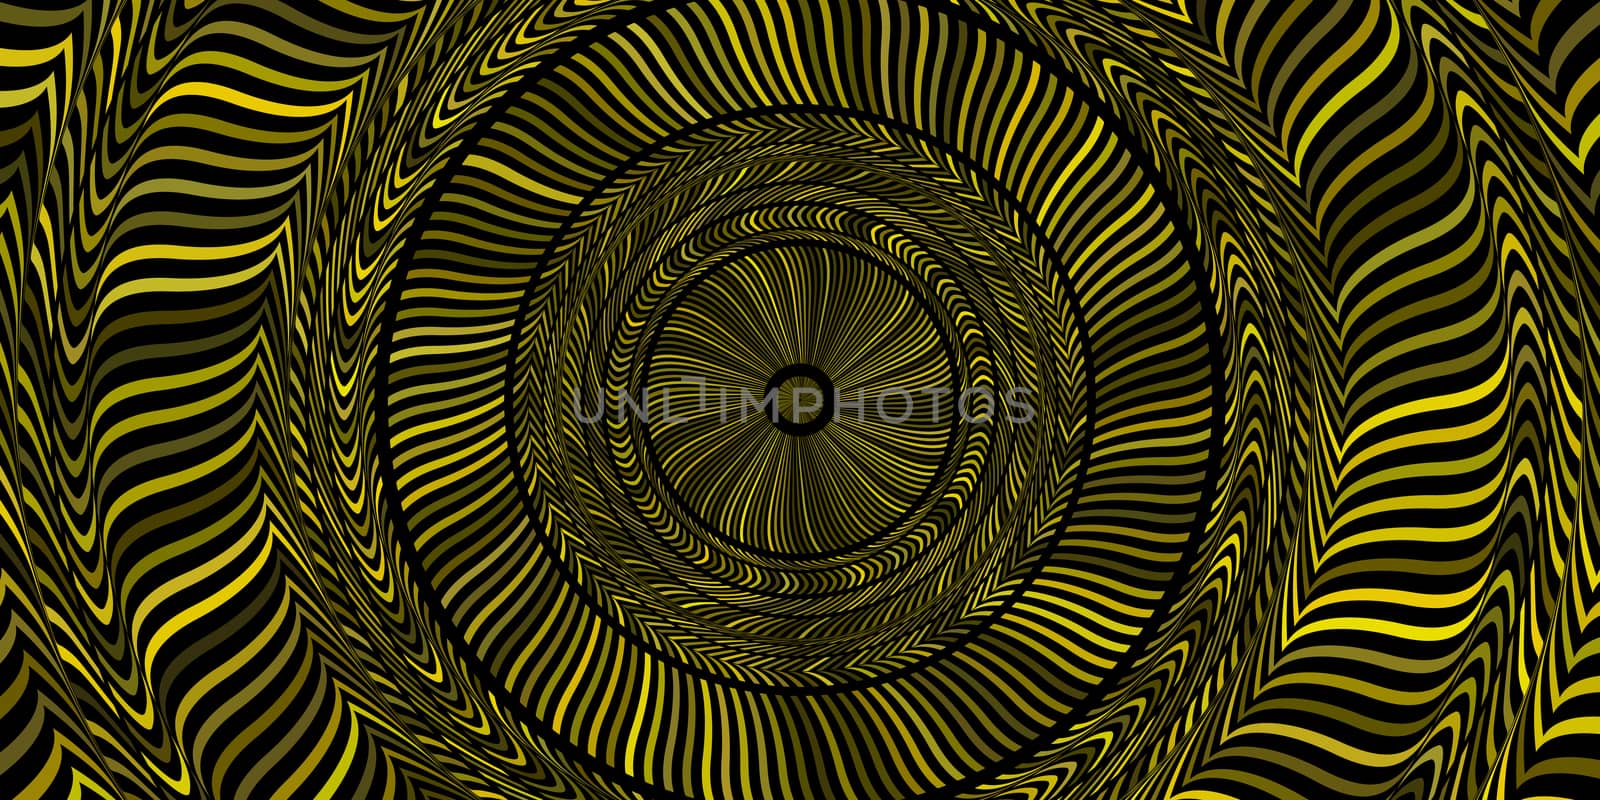 Golden Circles Art Action Background. Round Wheel Rhythm Backdrop. Center Concept.